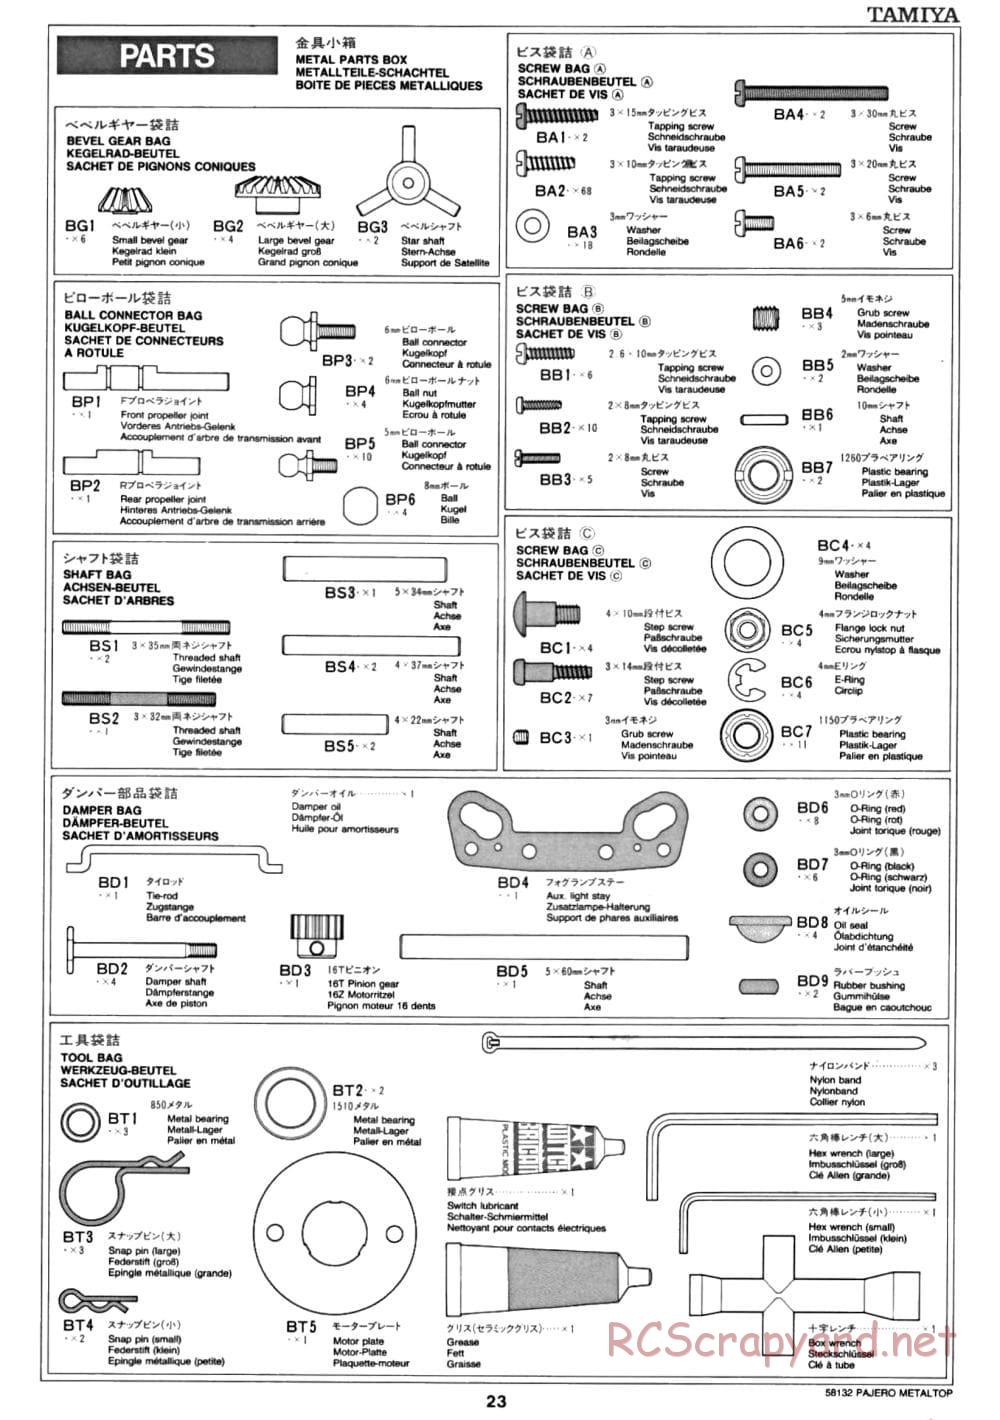 Tamiya - Mitsubishi Pajero Metaltop Wide - CC-01 Chassis - Manual - Page 23